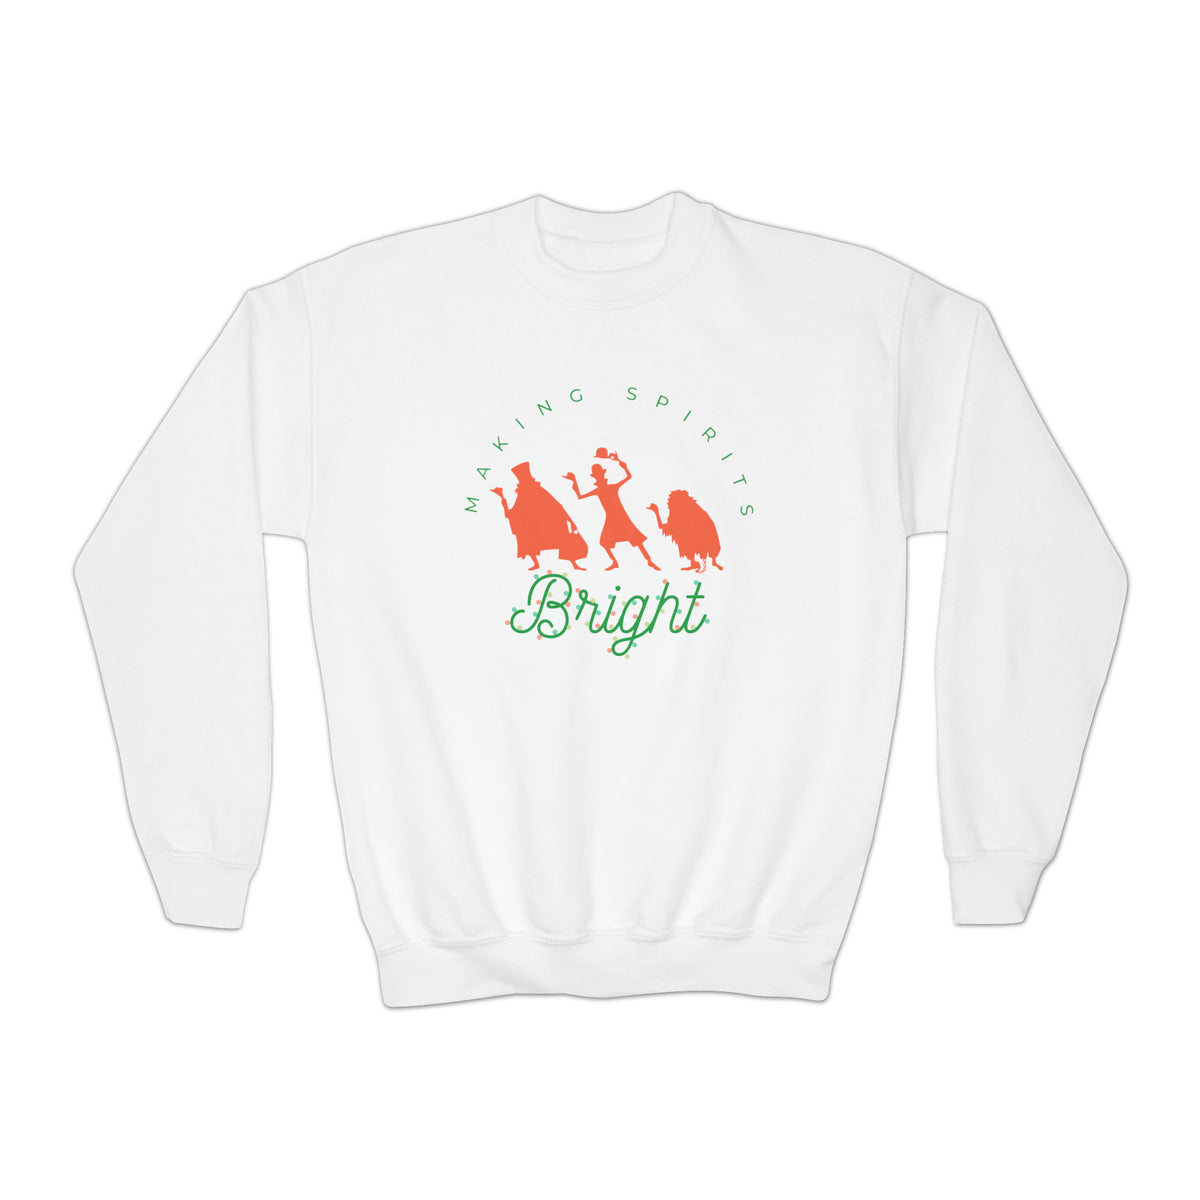 Making Spirits Bright Gildan Youth Crewneck Sweatshirt